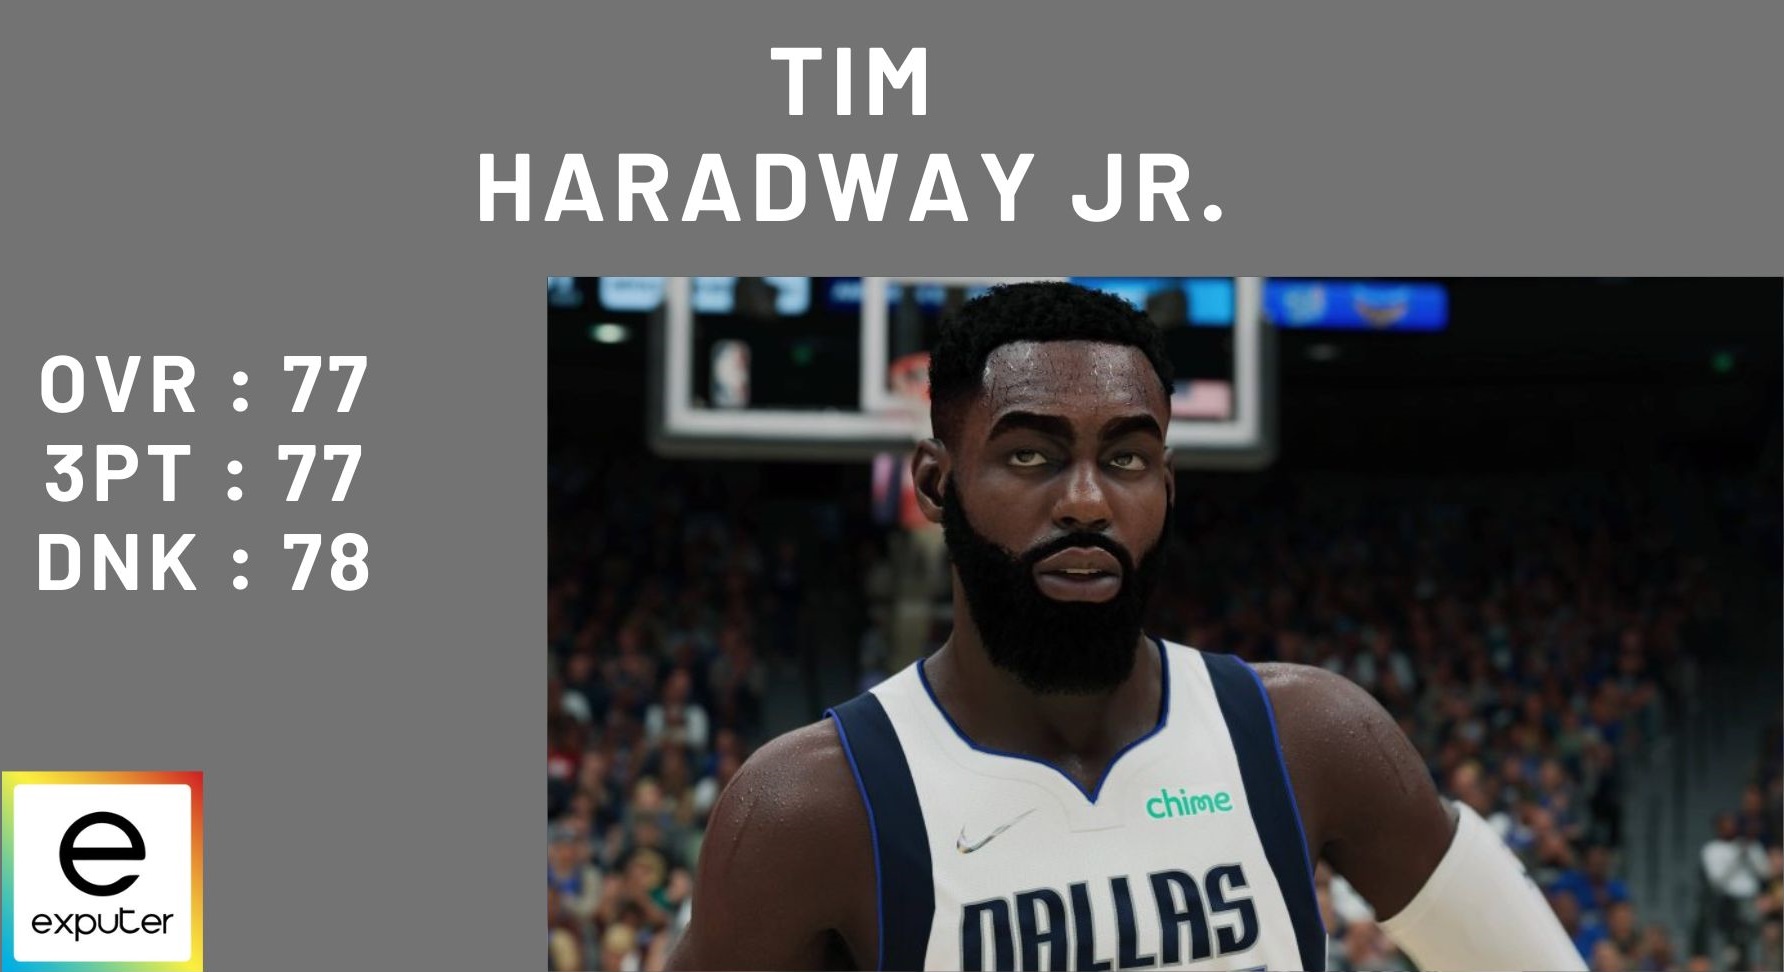 Valutazioni di Tim Haradway Jr. in NBA 2k23.